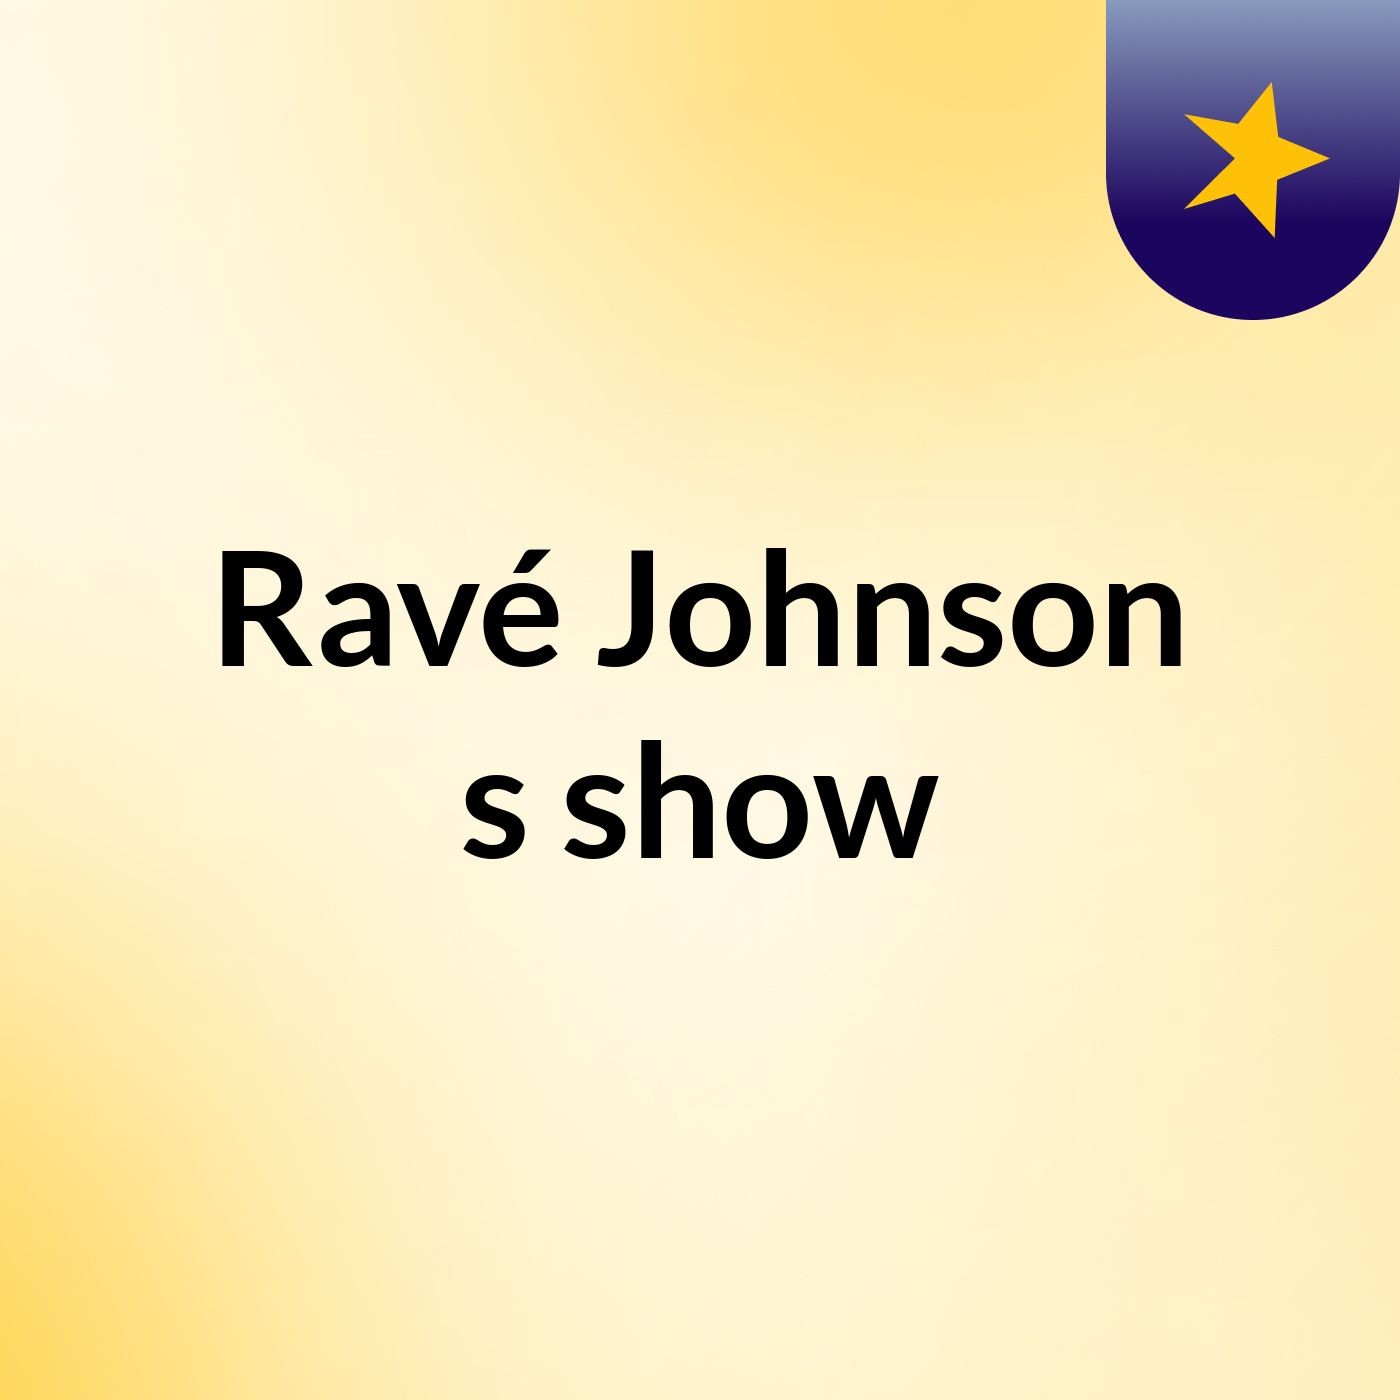 Ravé Johnson's show